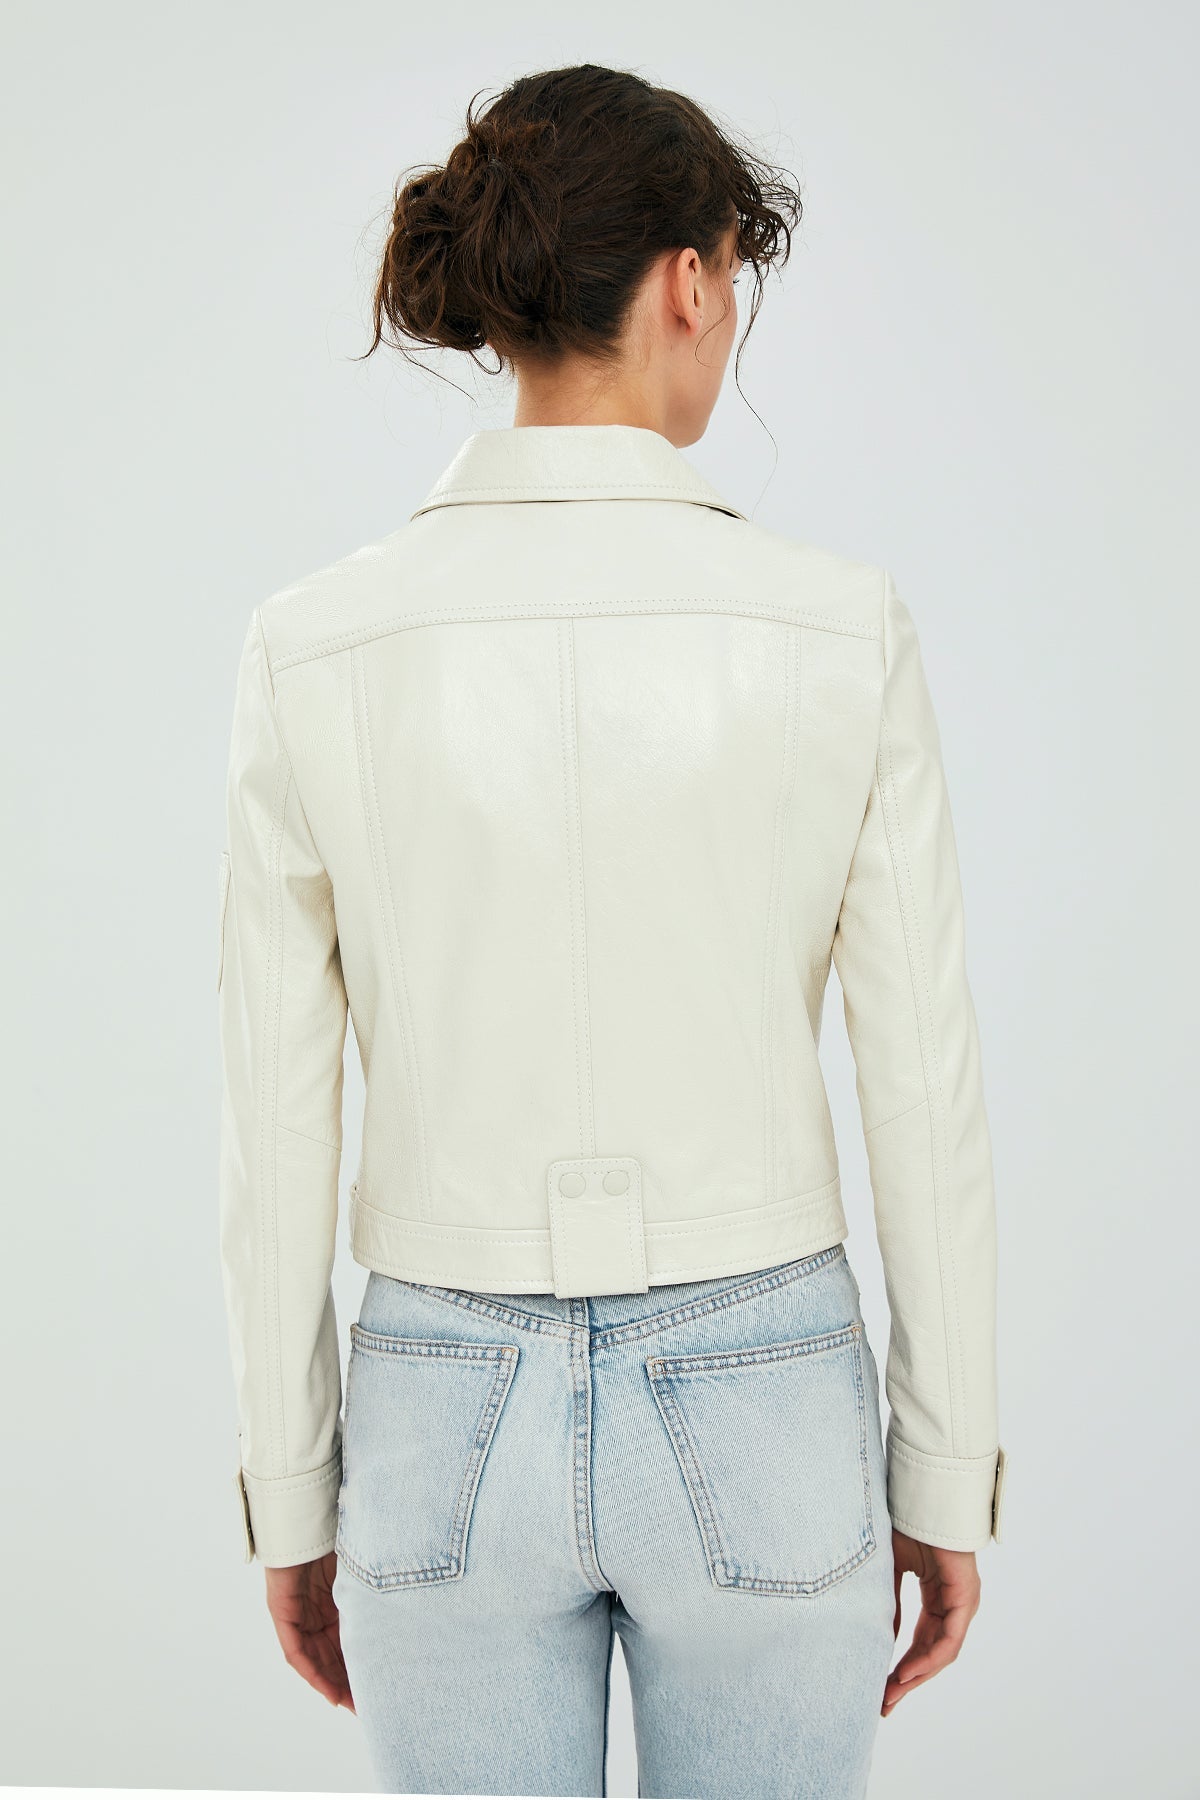 Sirena Women's White Short Leather Jacket